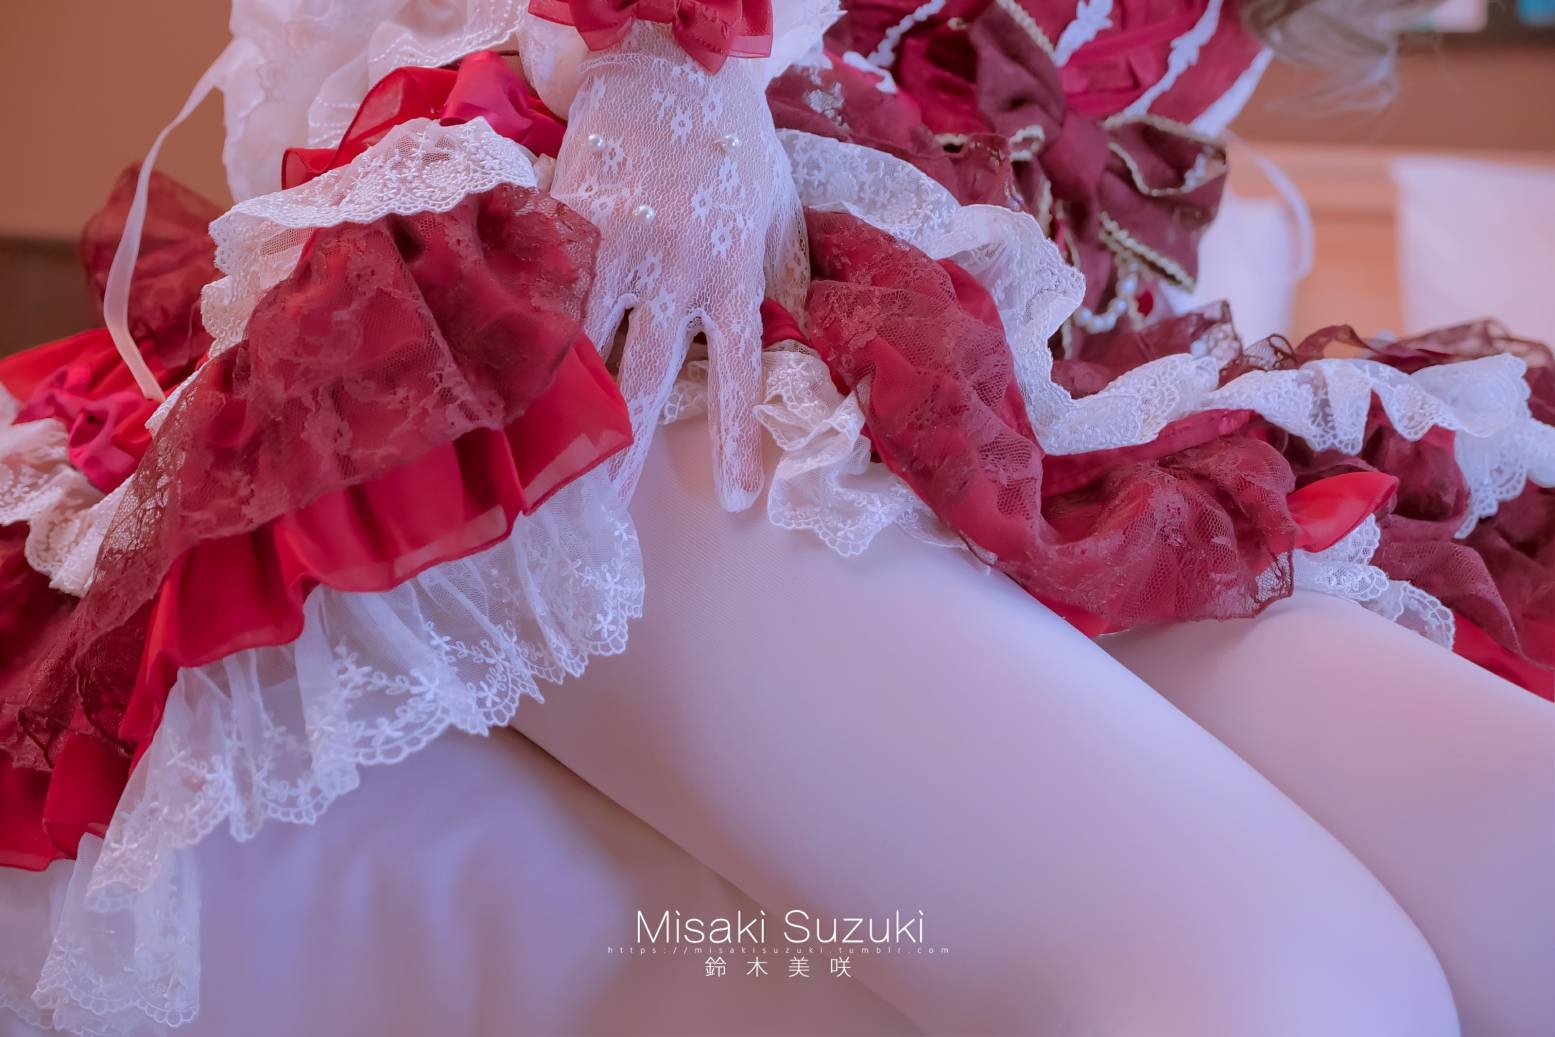 Misaki Suzuki - 援x交友人的LO娘 跨年lo娘(3)